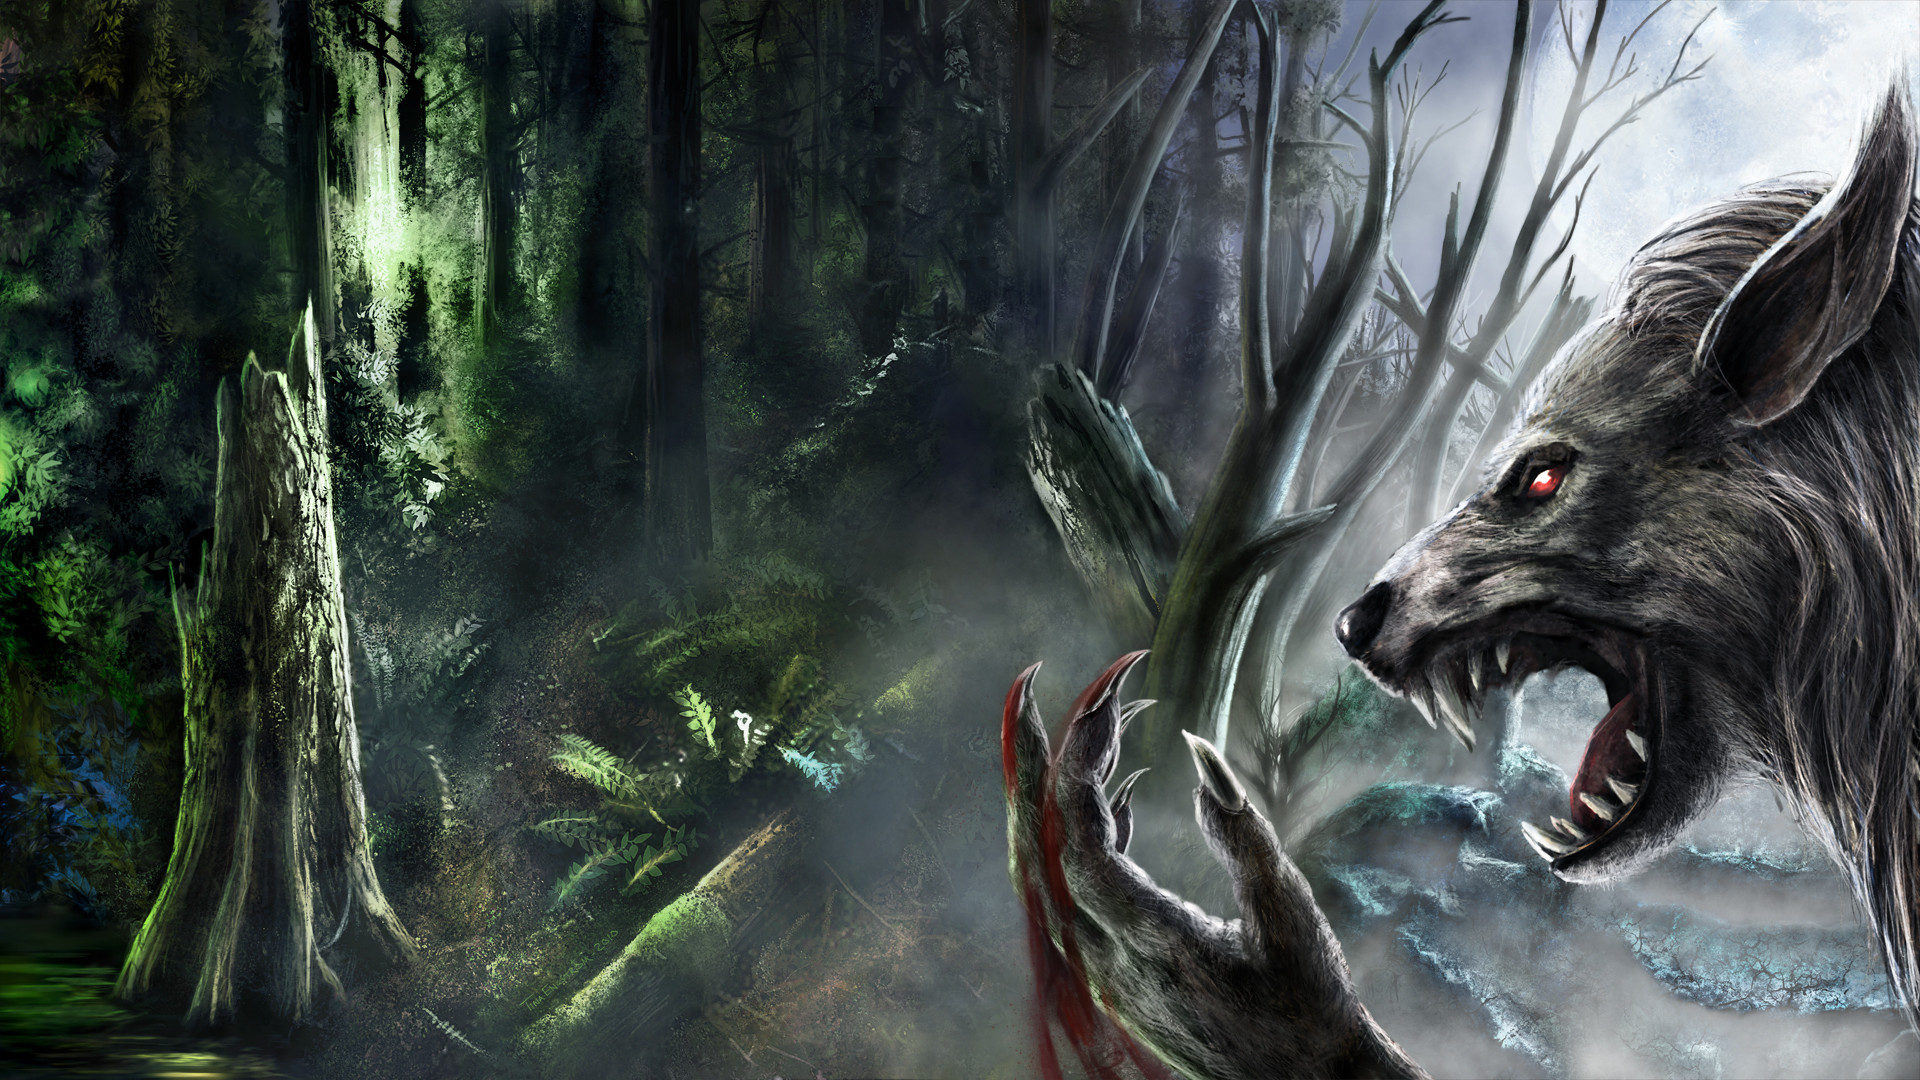 1920x1080 Werewolf fantasy art dark monster creatures blood fangs trees forest spooky  creepy scary evil wallpaper |